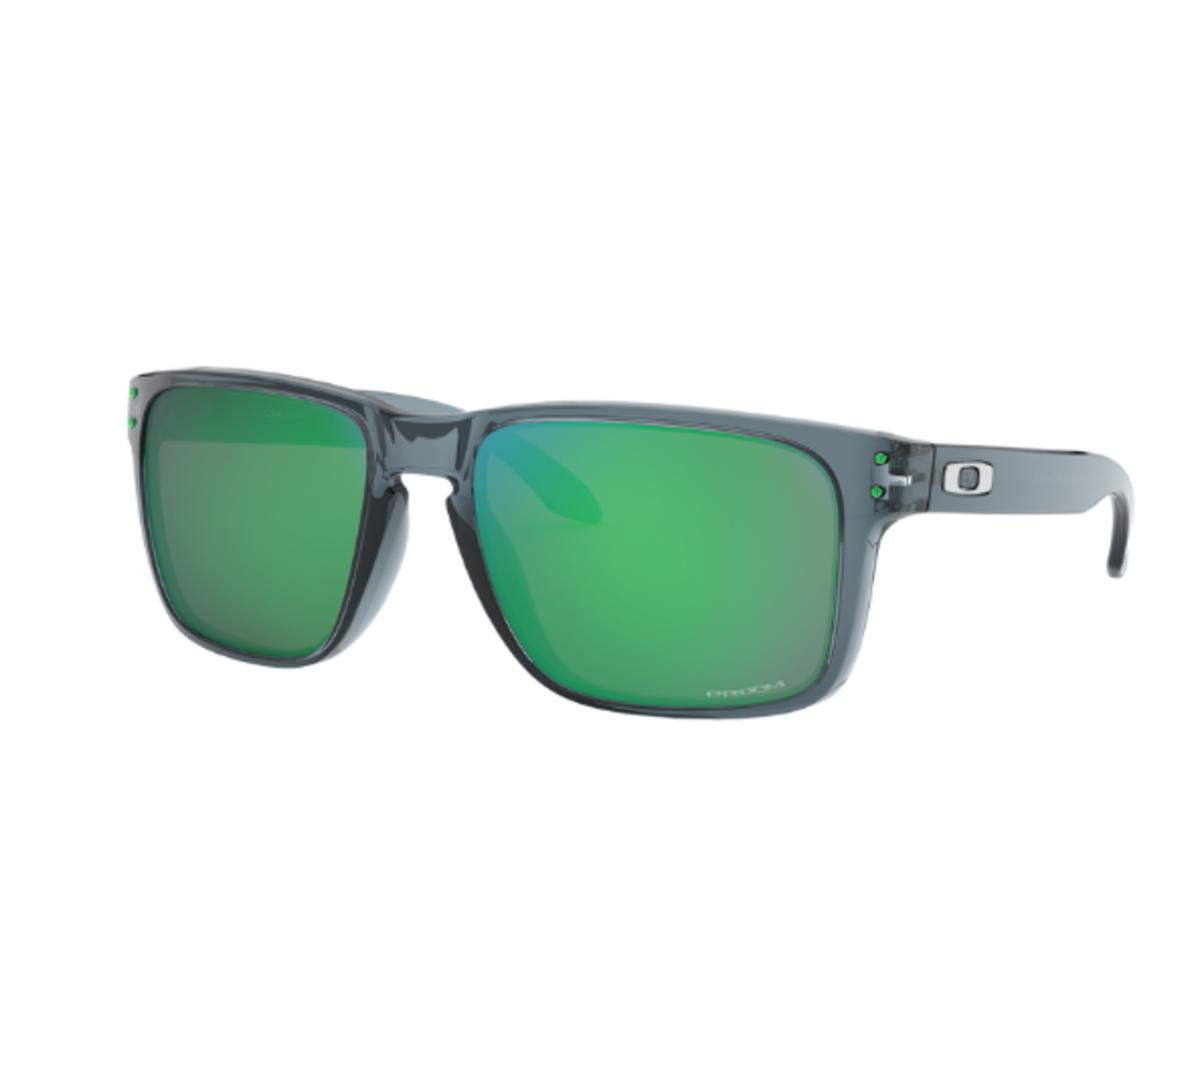 Oakley Holbrook XL Sunglasses - $167.99